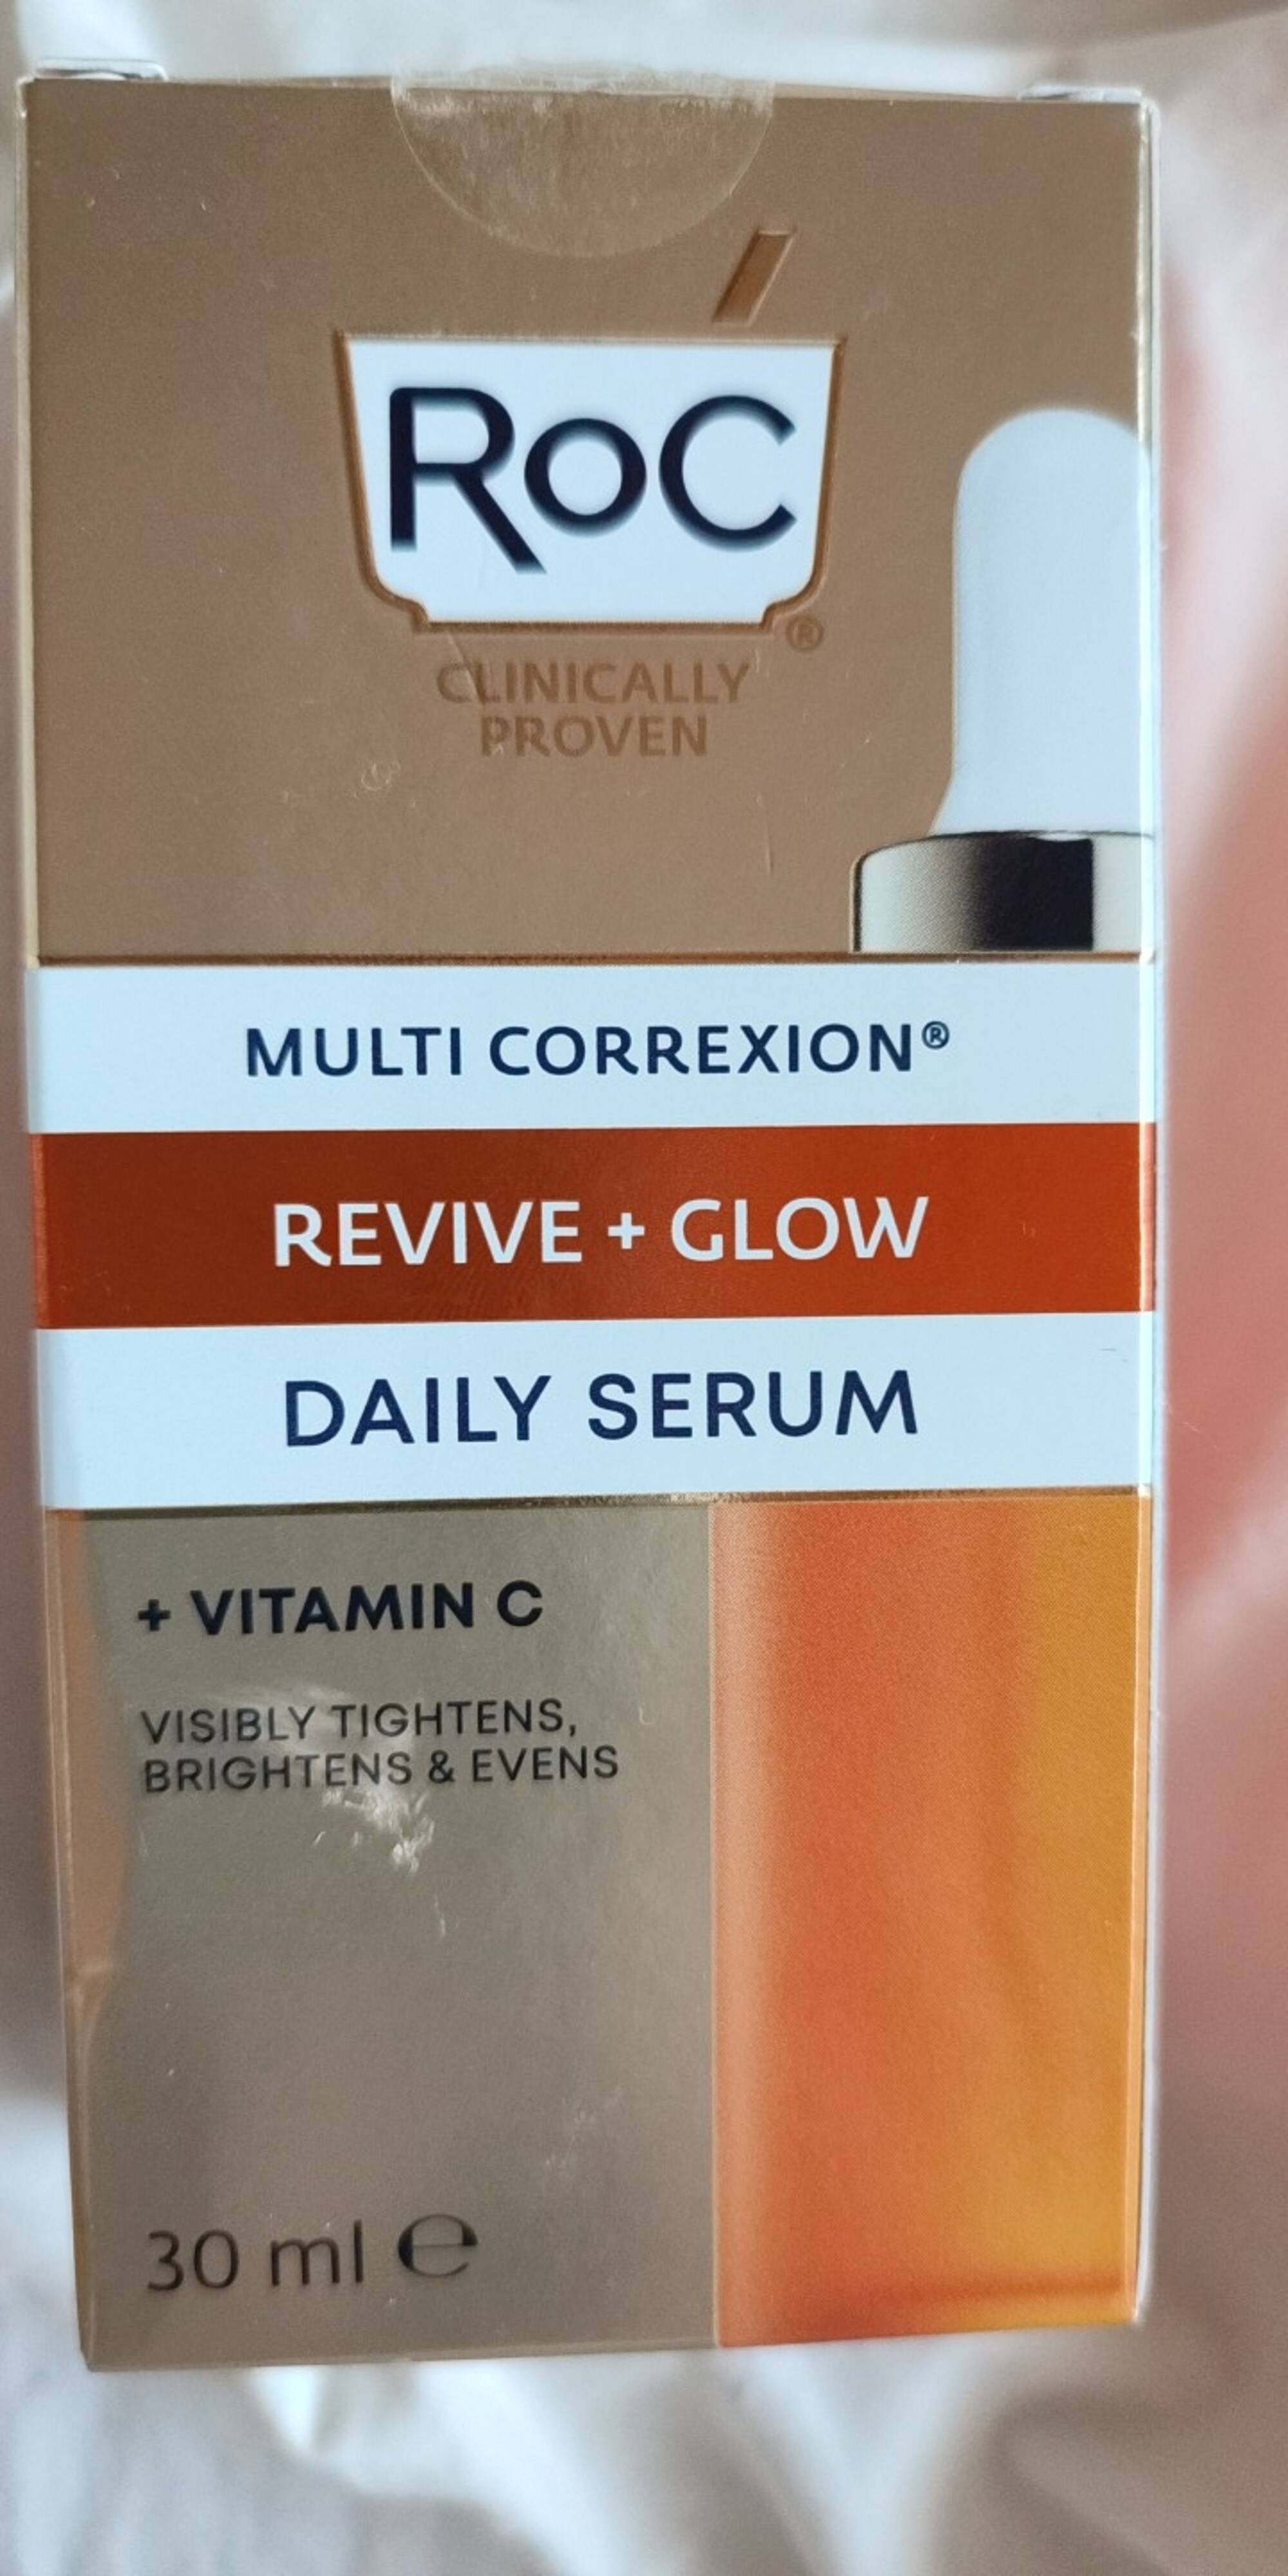 ROC - Multi correxion - Daily serum